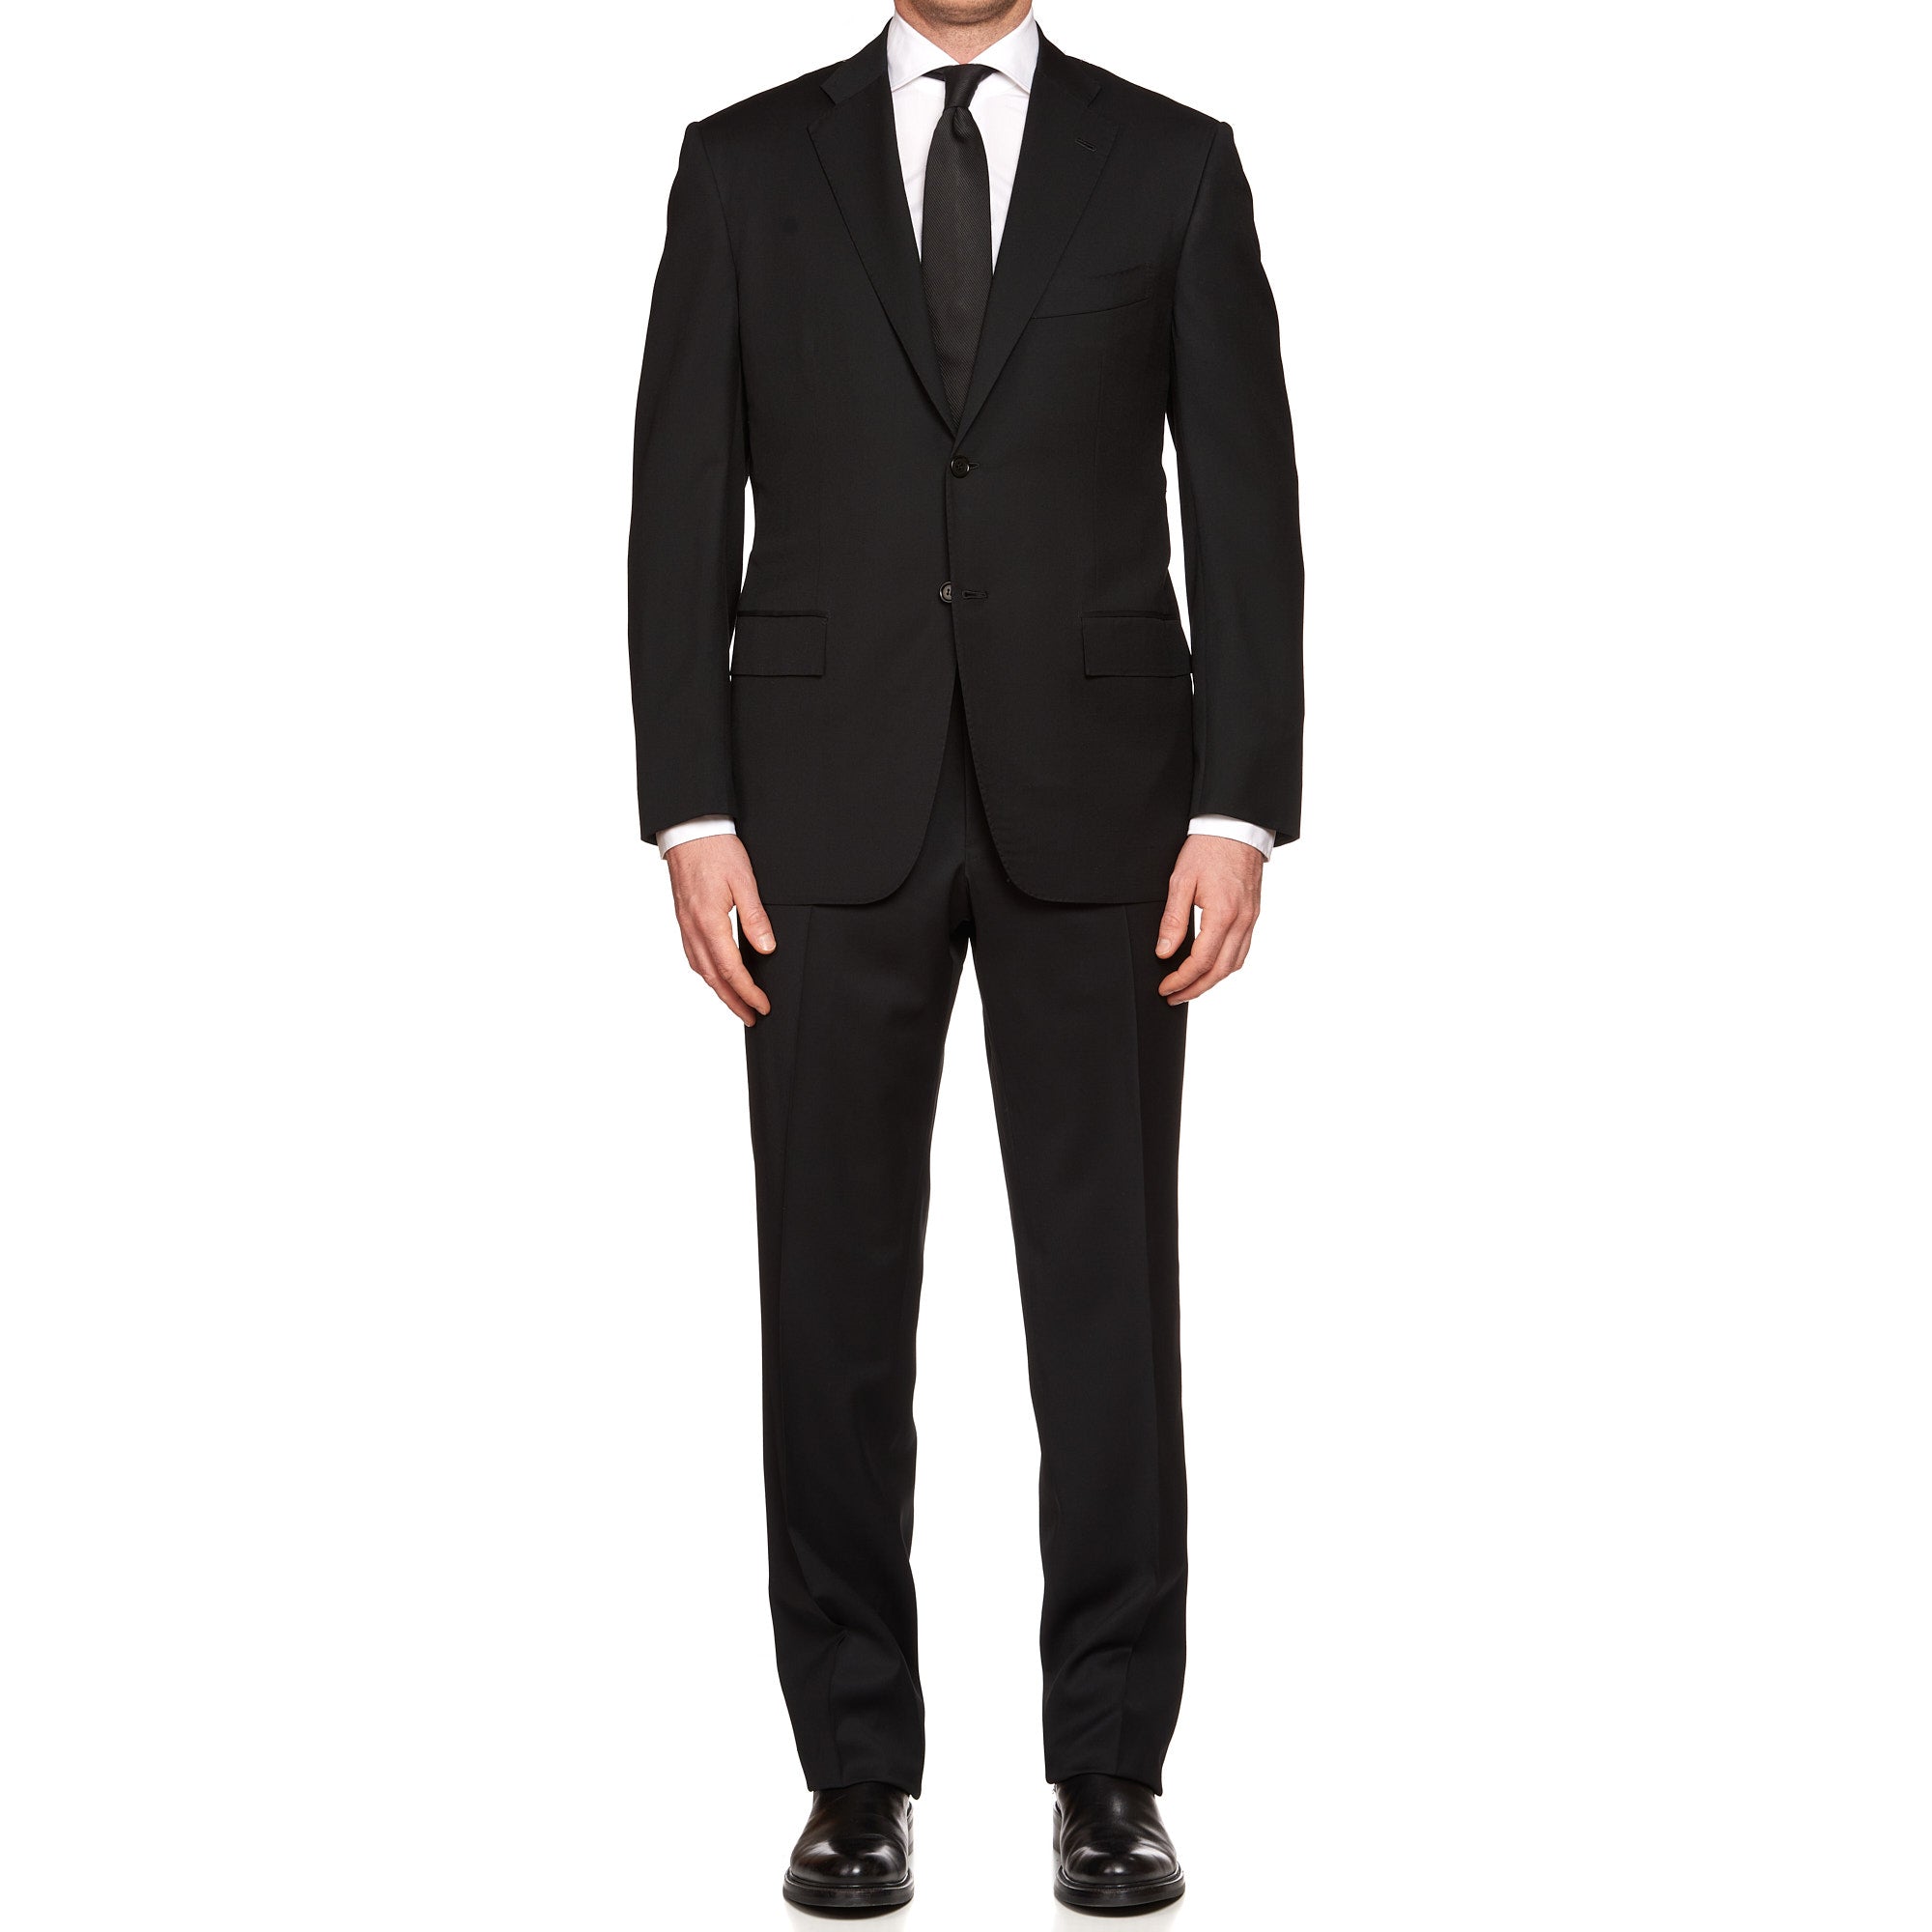 KITON Napoli for VANNUCCI Handmade Black Wool Elegant Suit EU 54 NEW US 44 Regular Fit